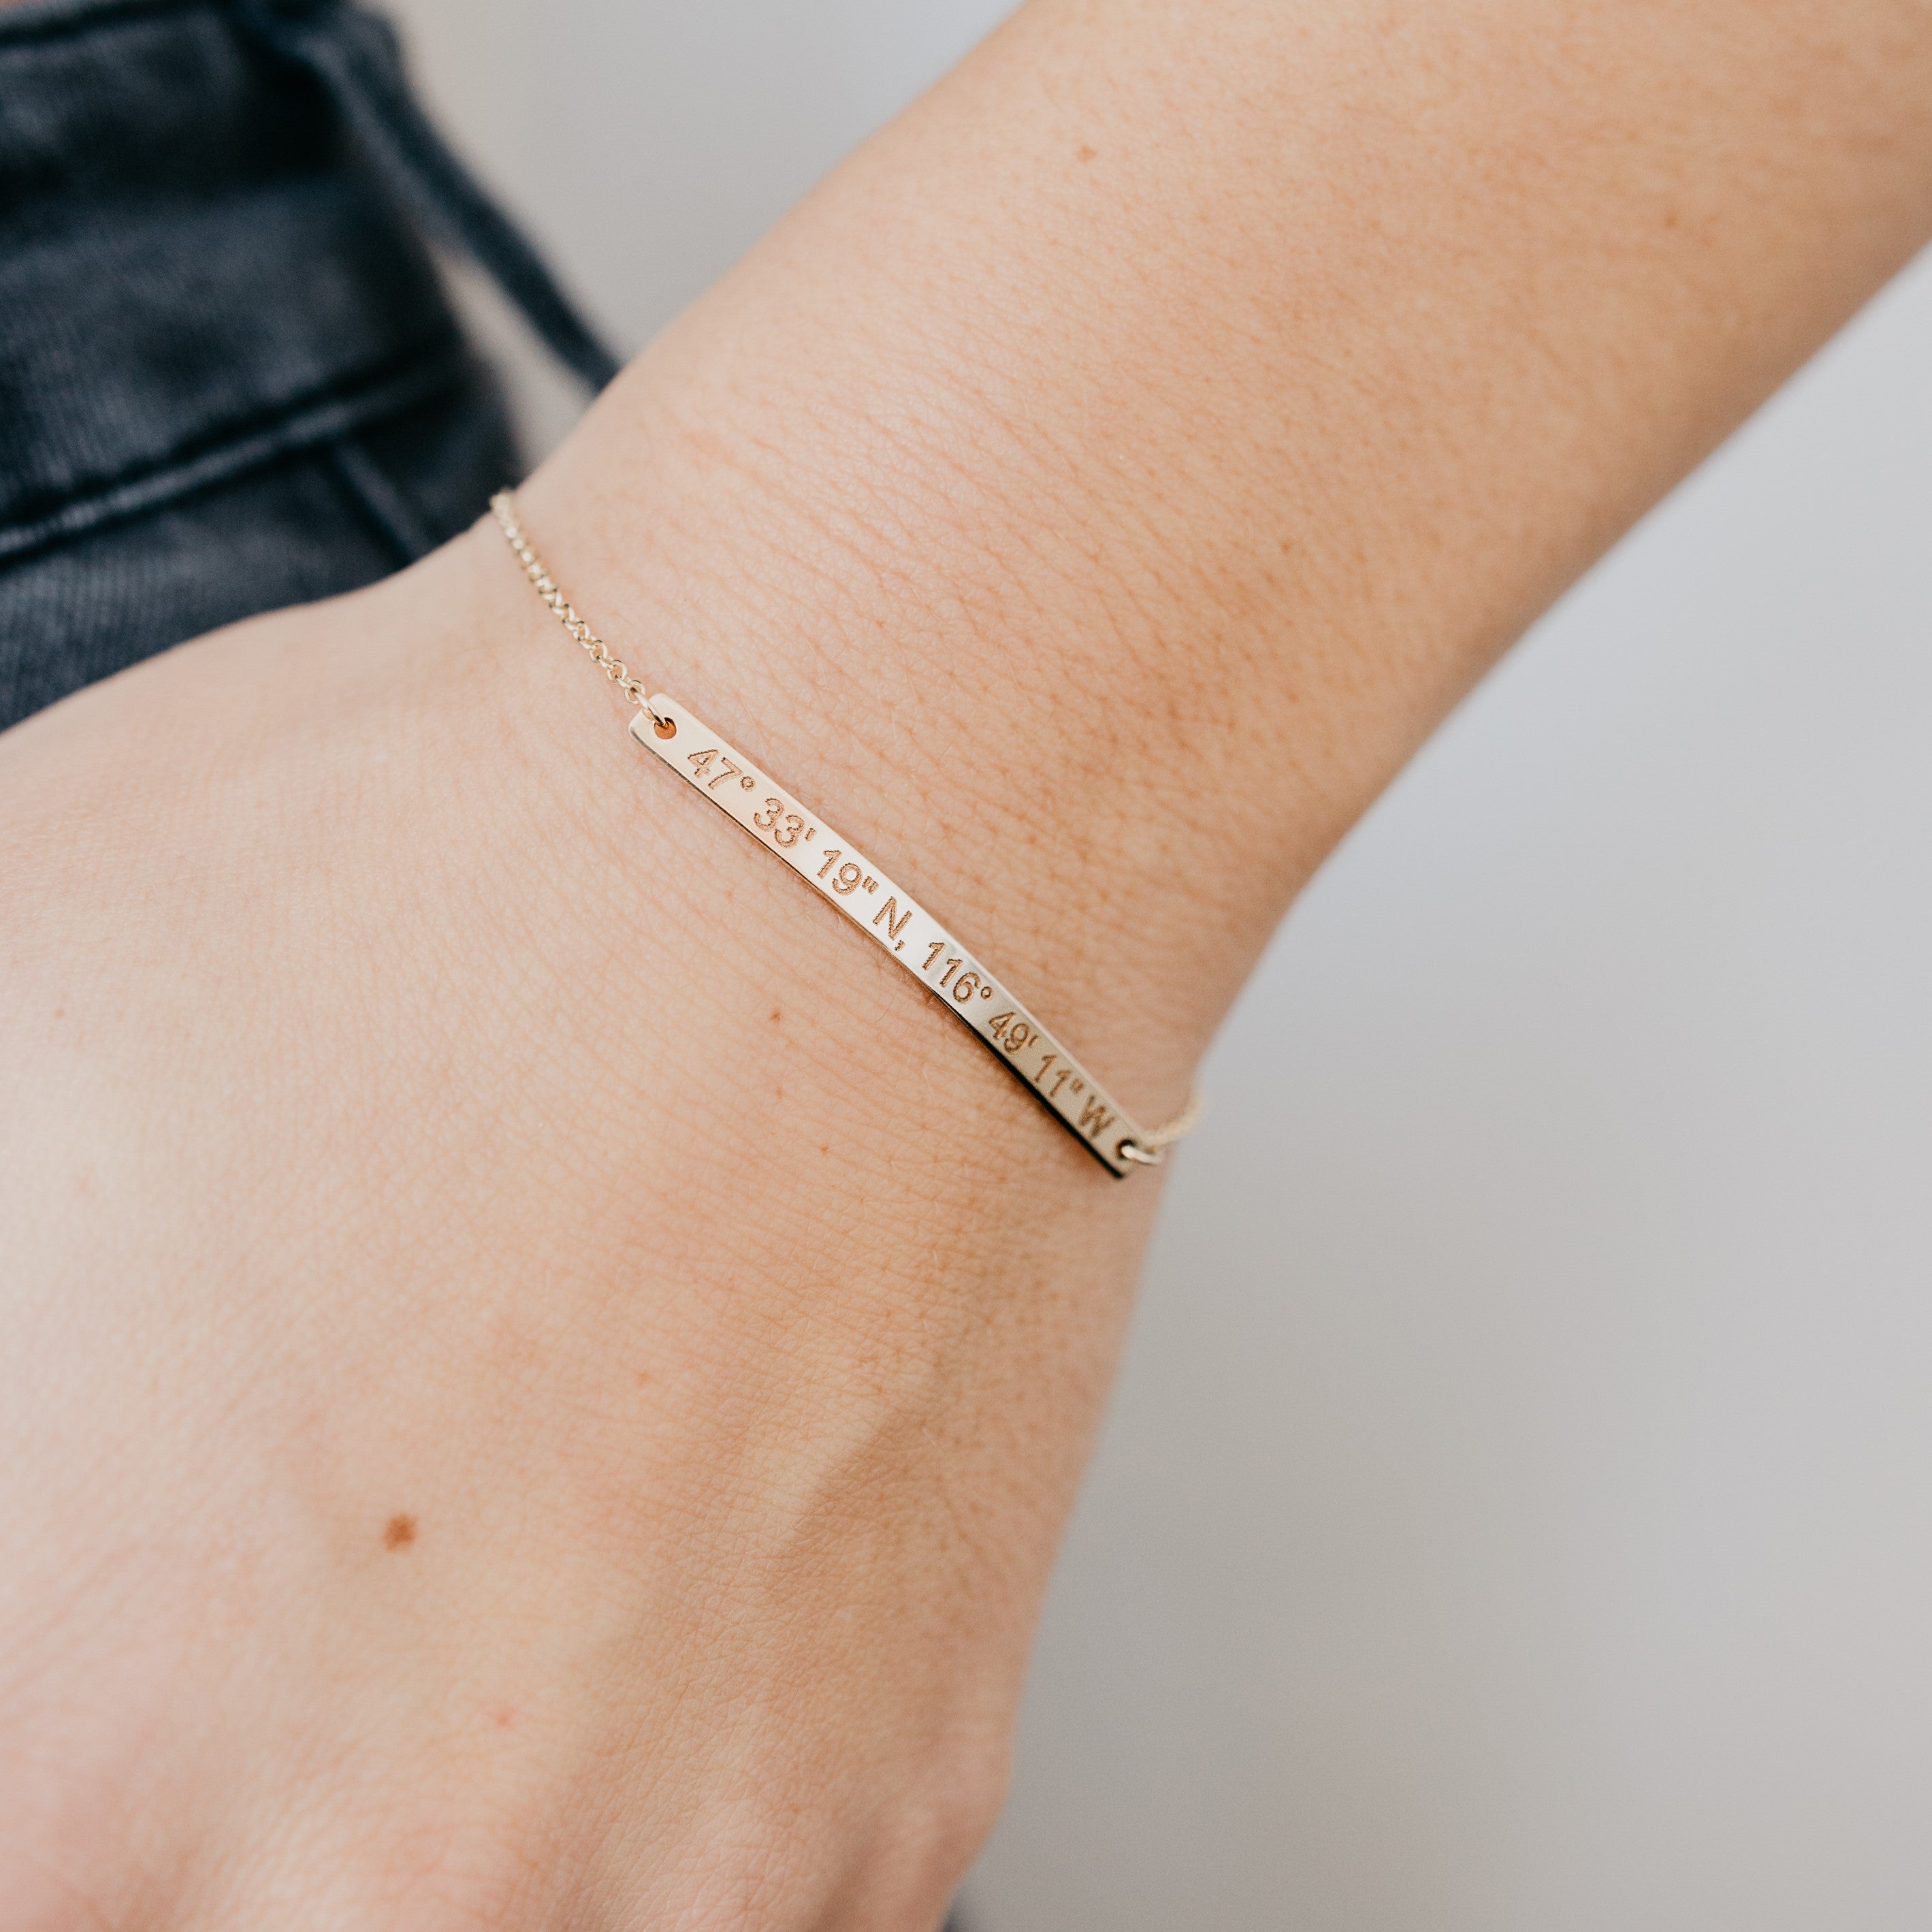 dainty coordinates bar bracelet in gold by Lat & Lo on model's wrist